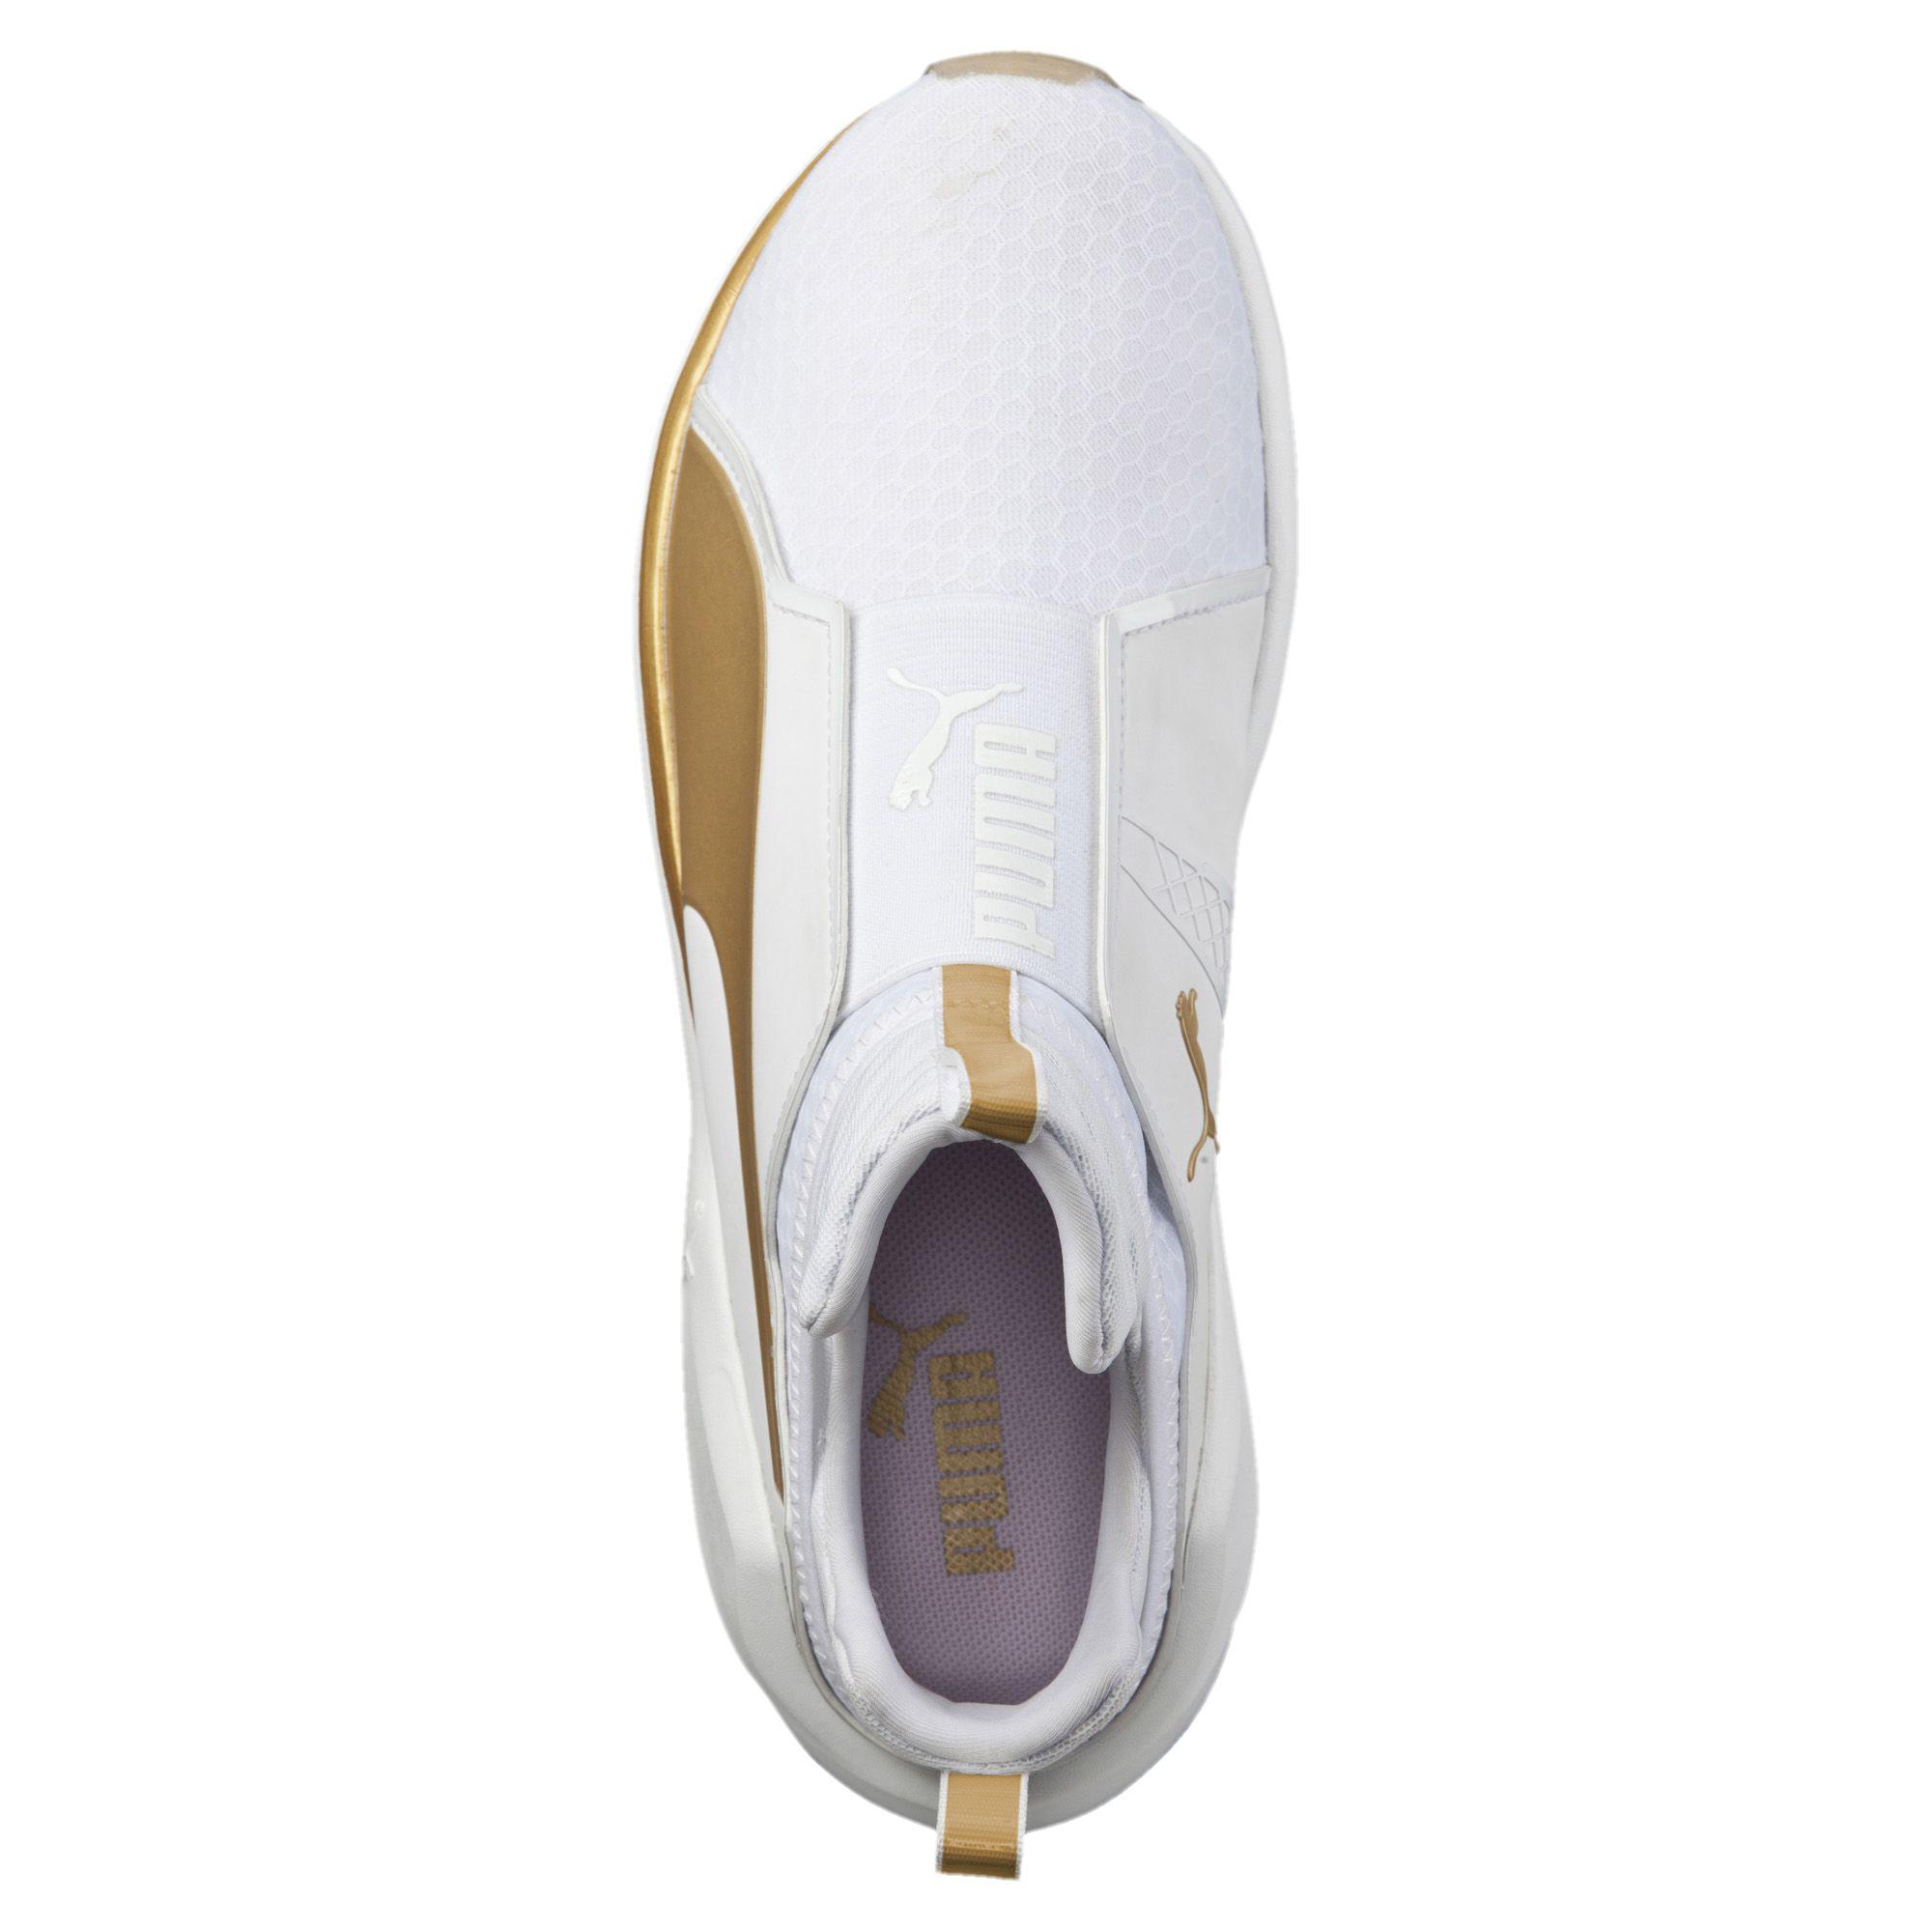 puma fierce gold women's training shoes